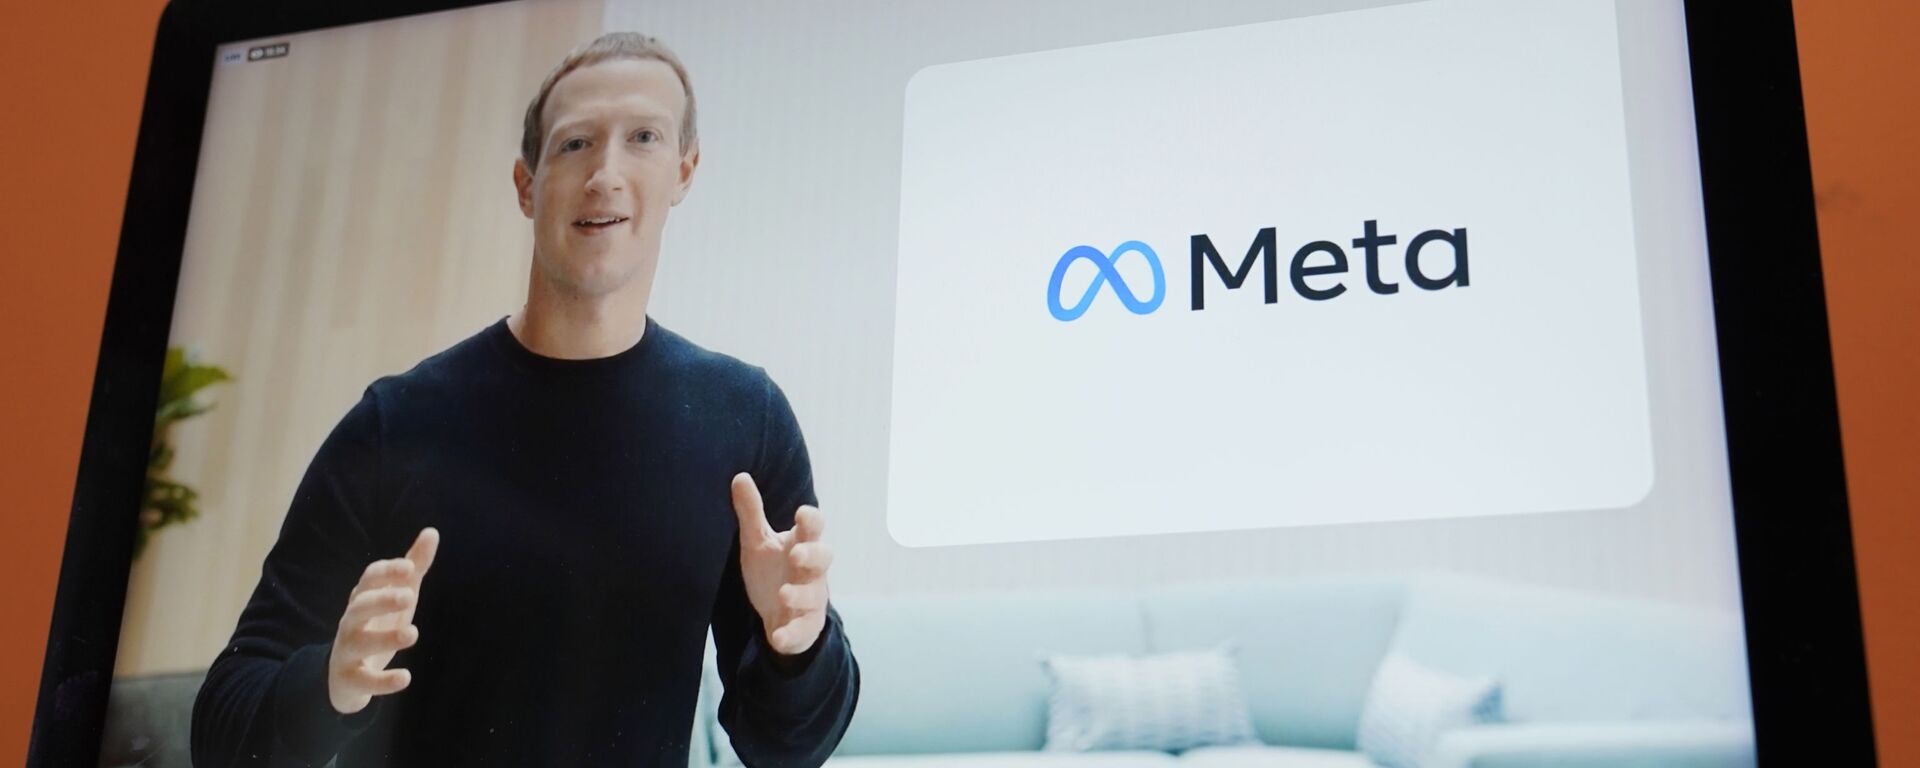 Mark Zuckerberg apresentando a marca da Meta - Sputnik Brasil, 1920, 23.12.2022